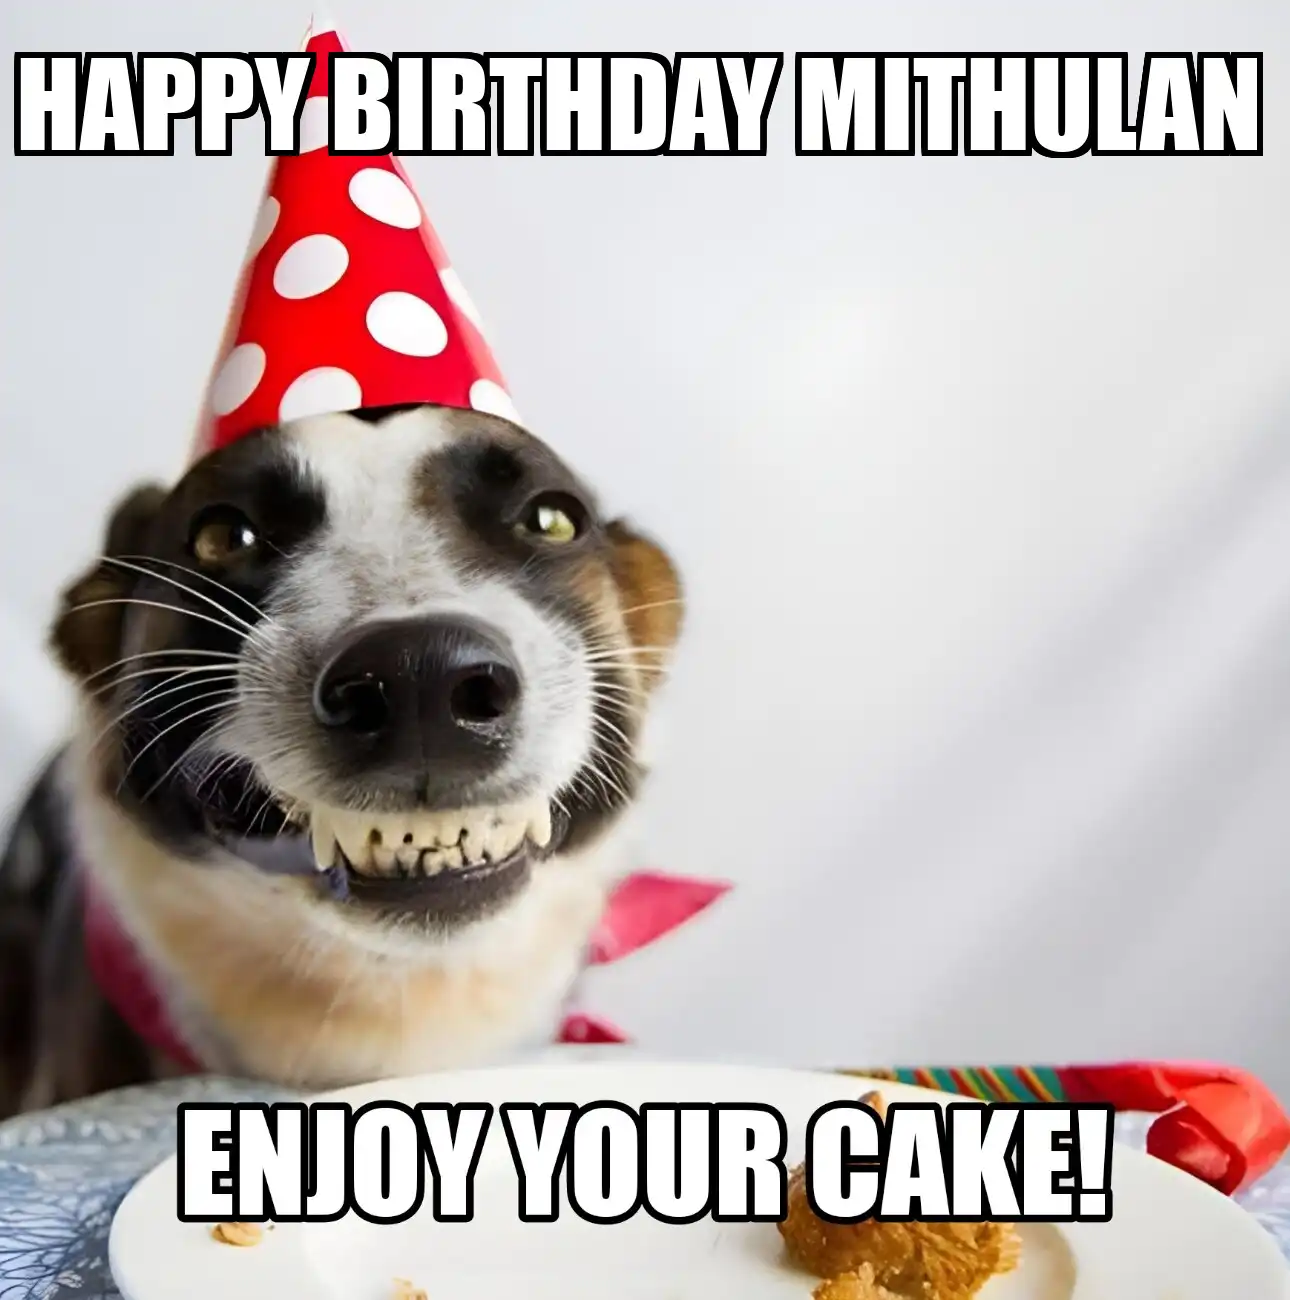 Happy Birthday Mithulan Enjoy Your Cake Dog Meme